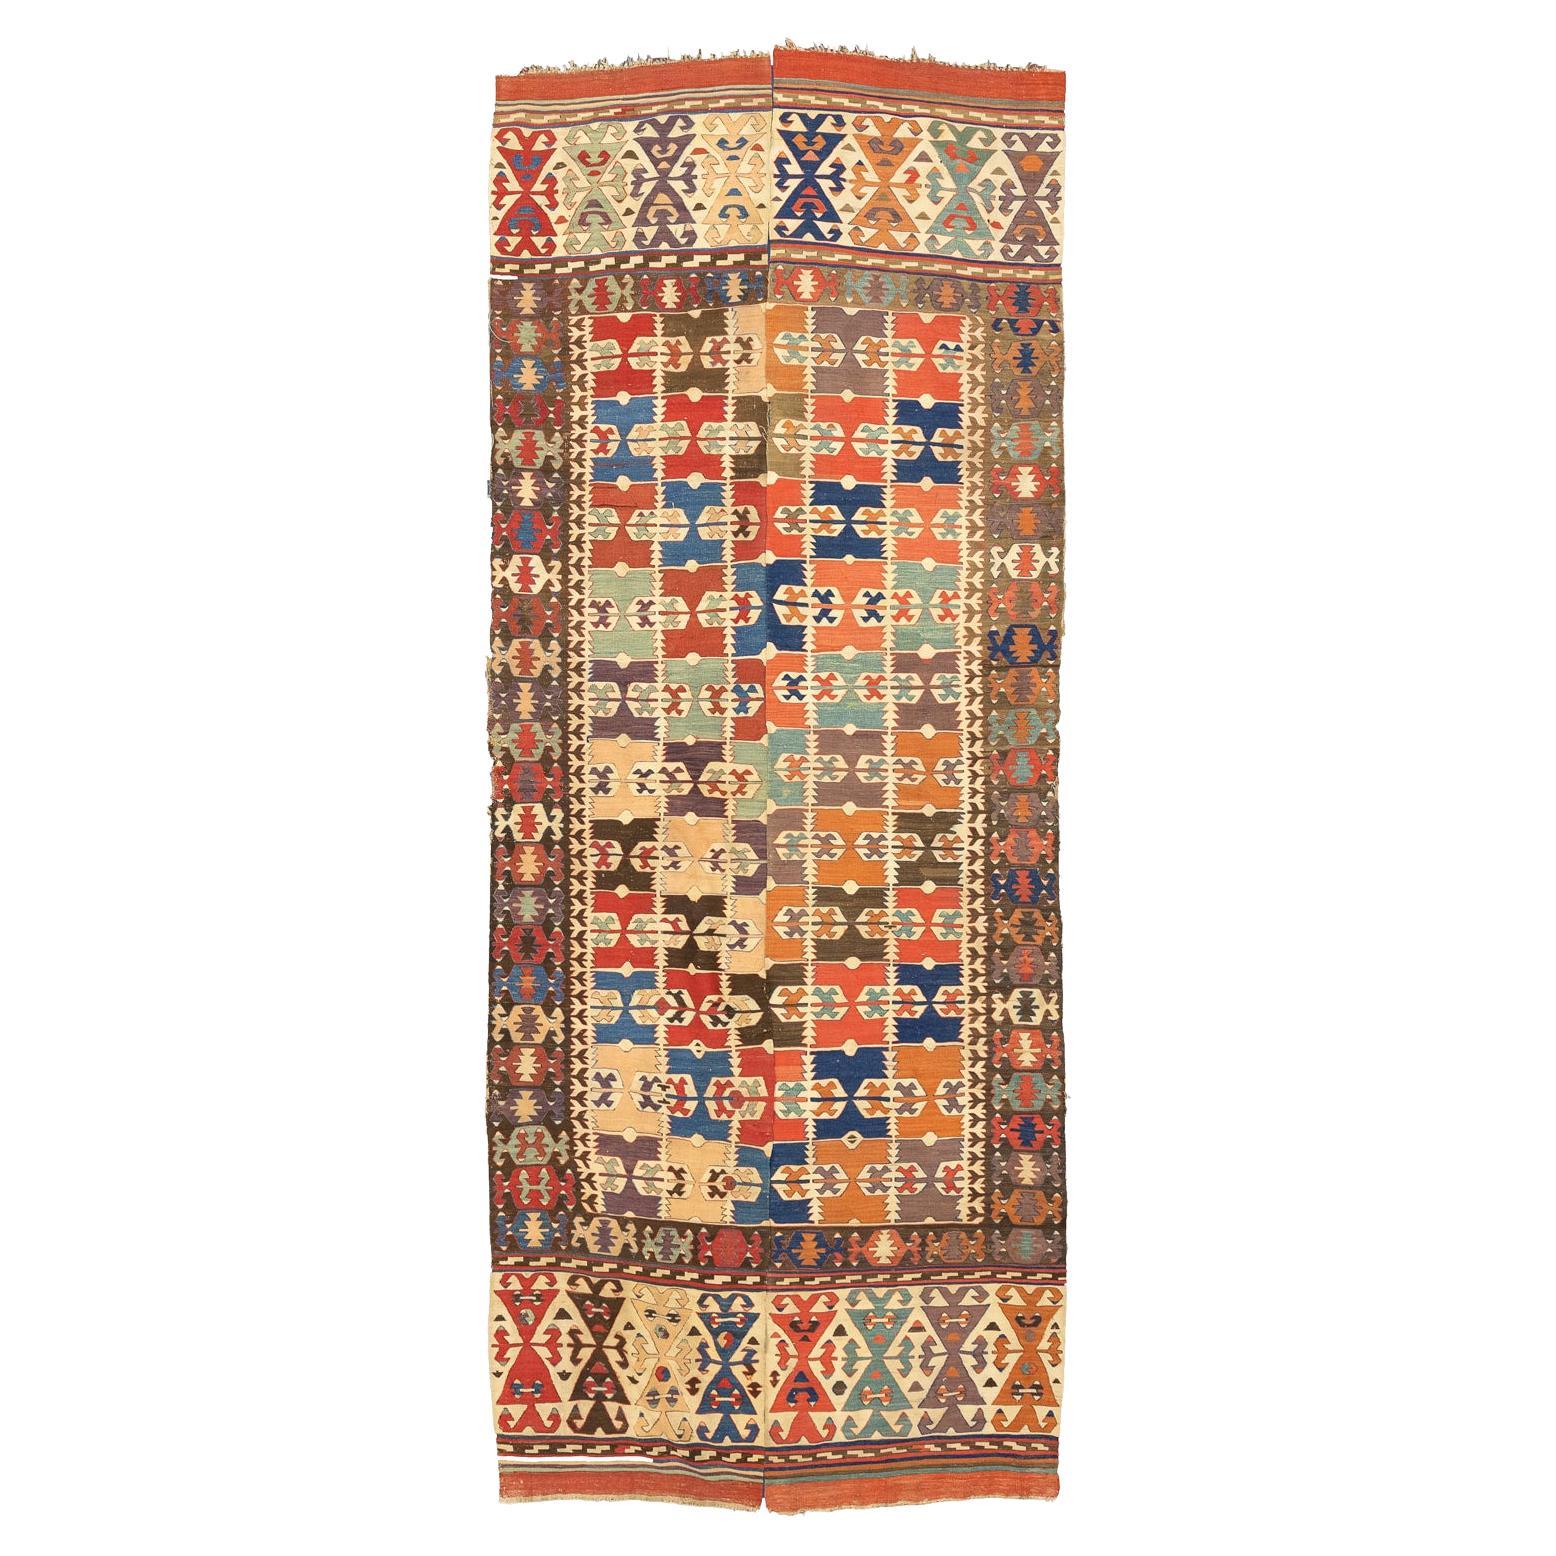 Antique Turkish Anatolian Multi-Color Kilim, 19th Century